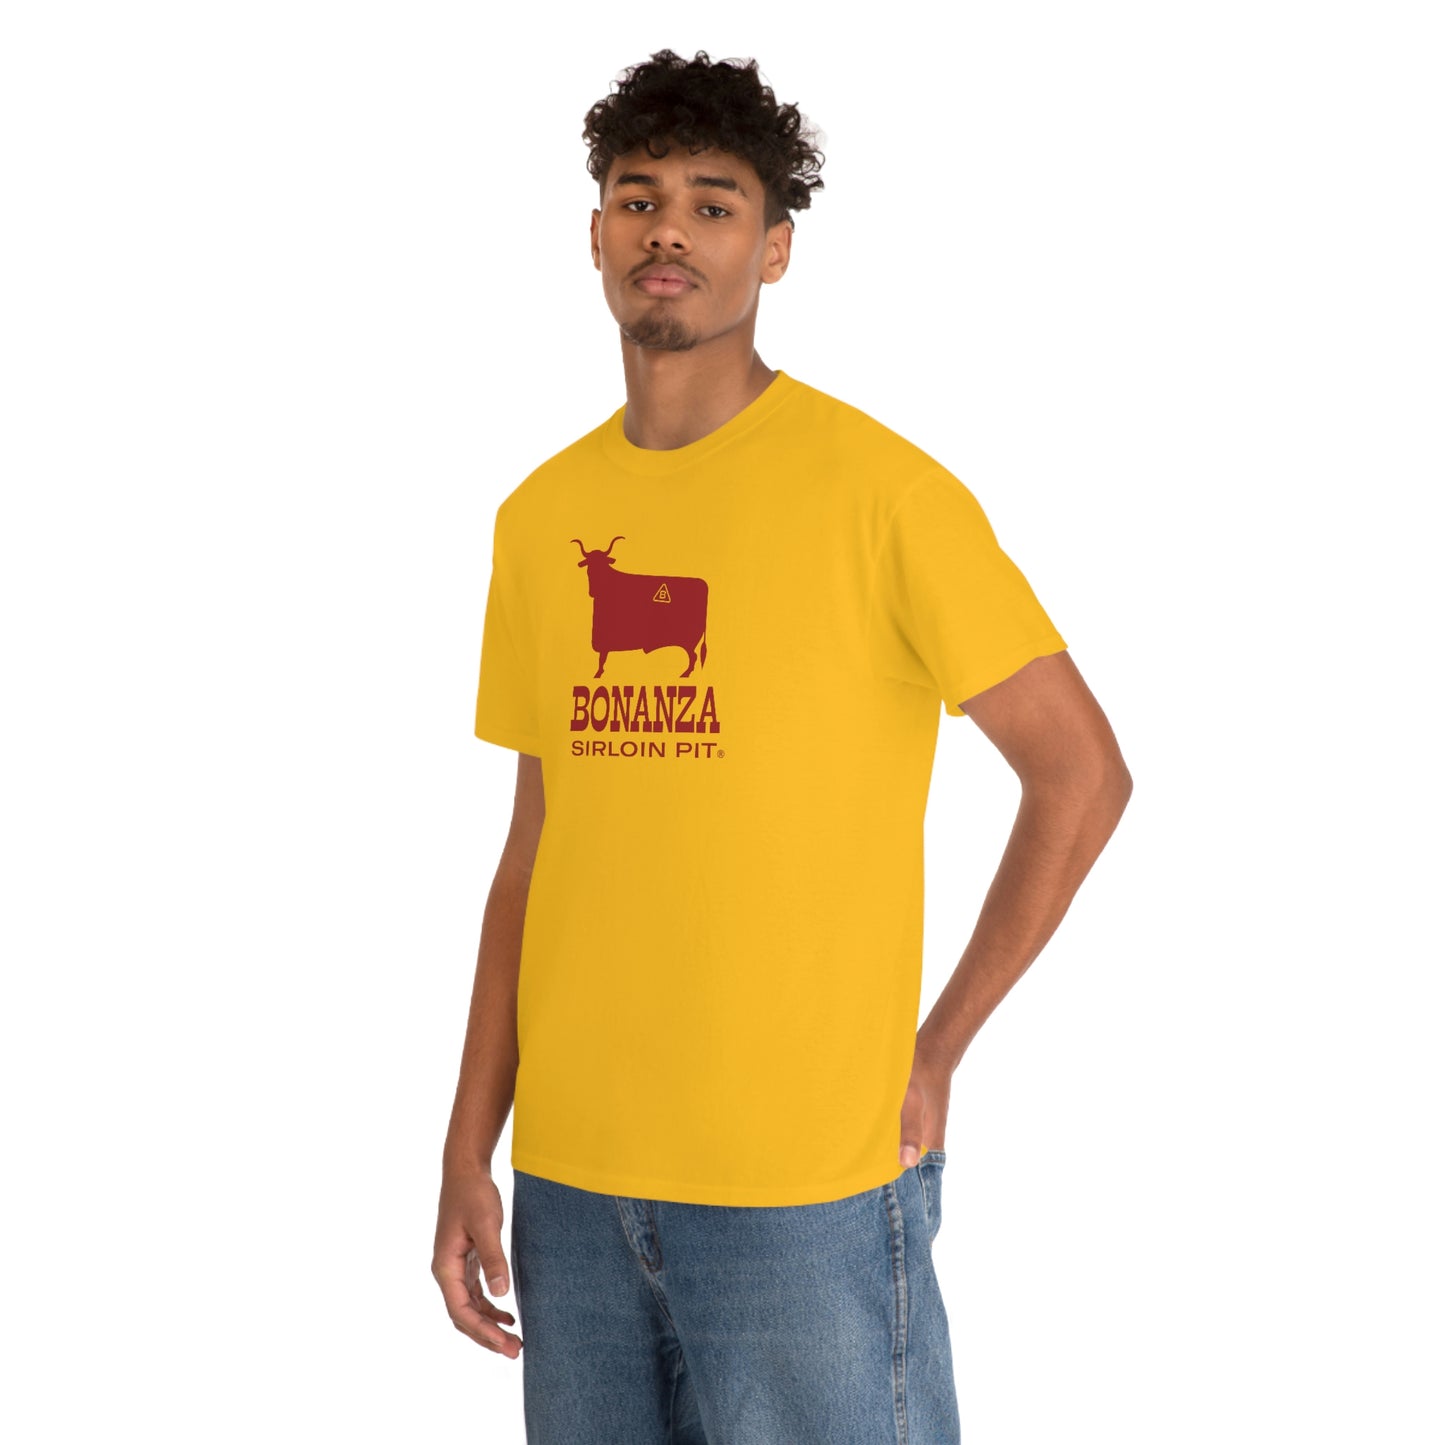 Bonanza Sirloin Pit T-Shirt